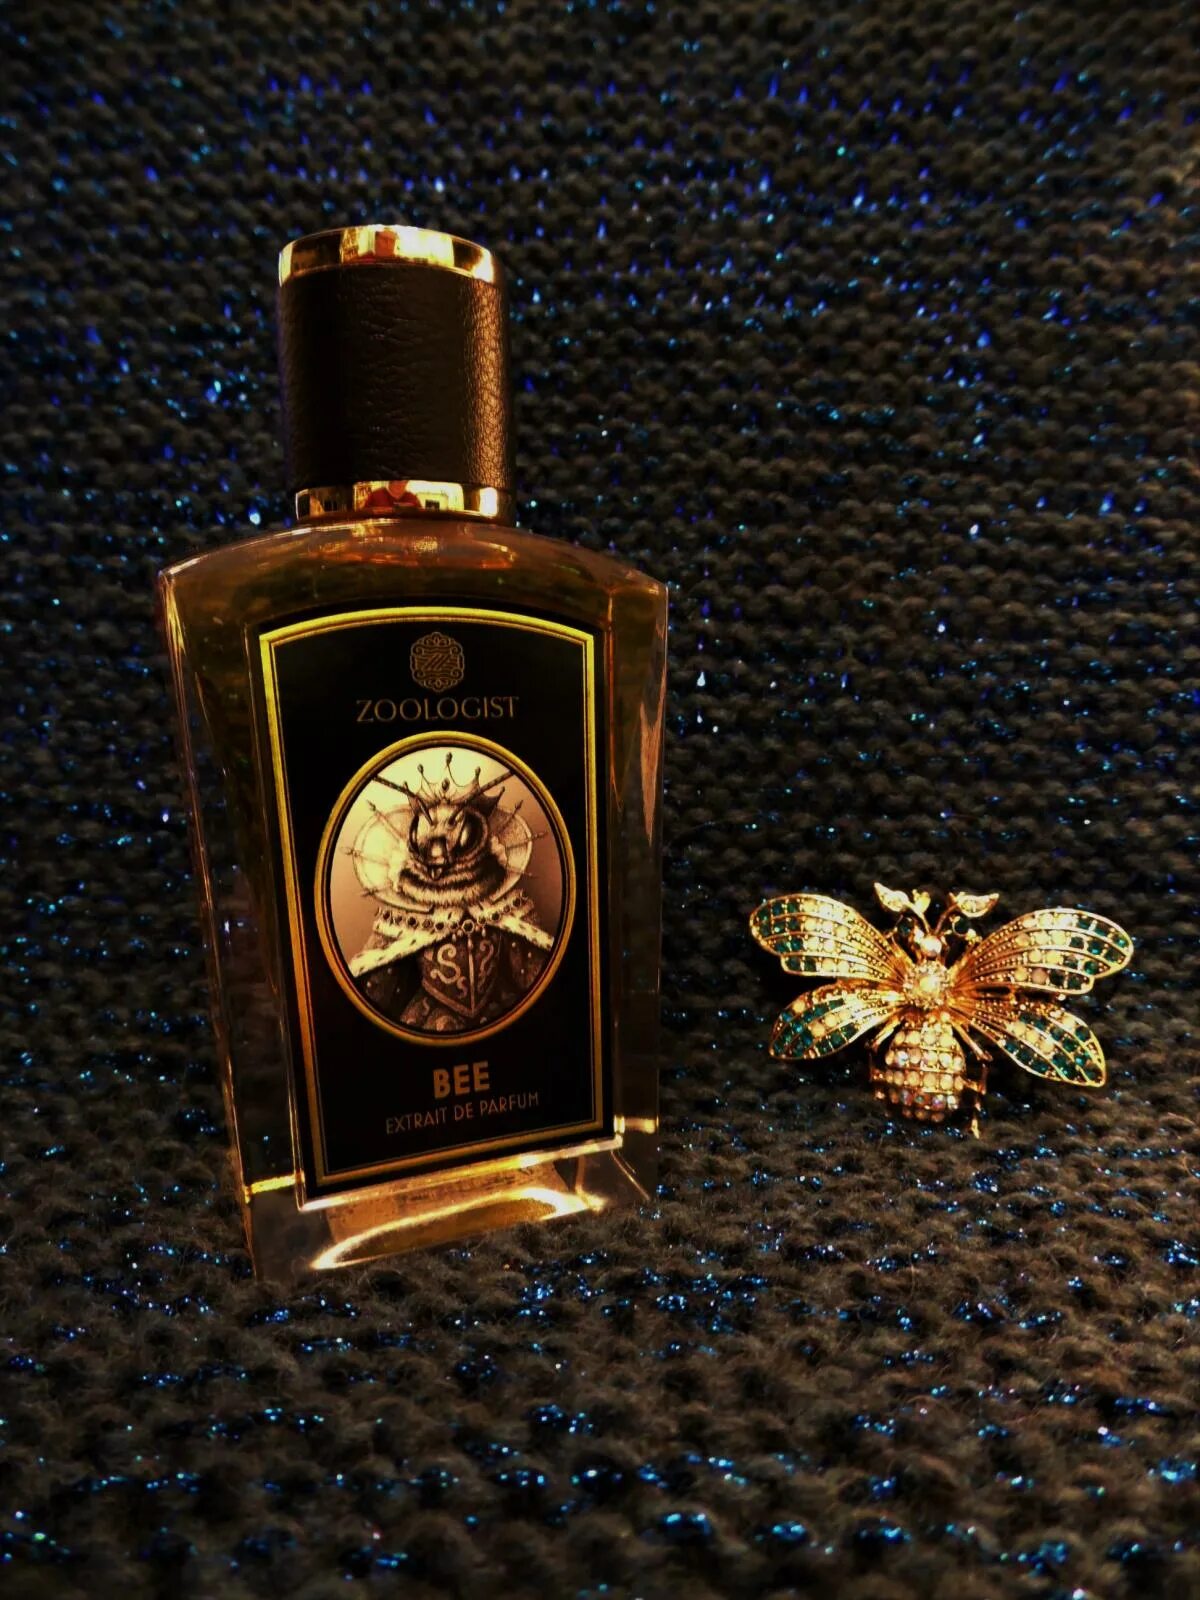 Zoologist perfumes. Zoologist Perfumes Bee. Духи zoologist Bee. Пчела зоологист Парфюм. Духи Bee женщин.